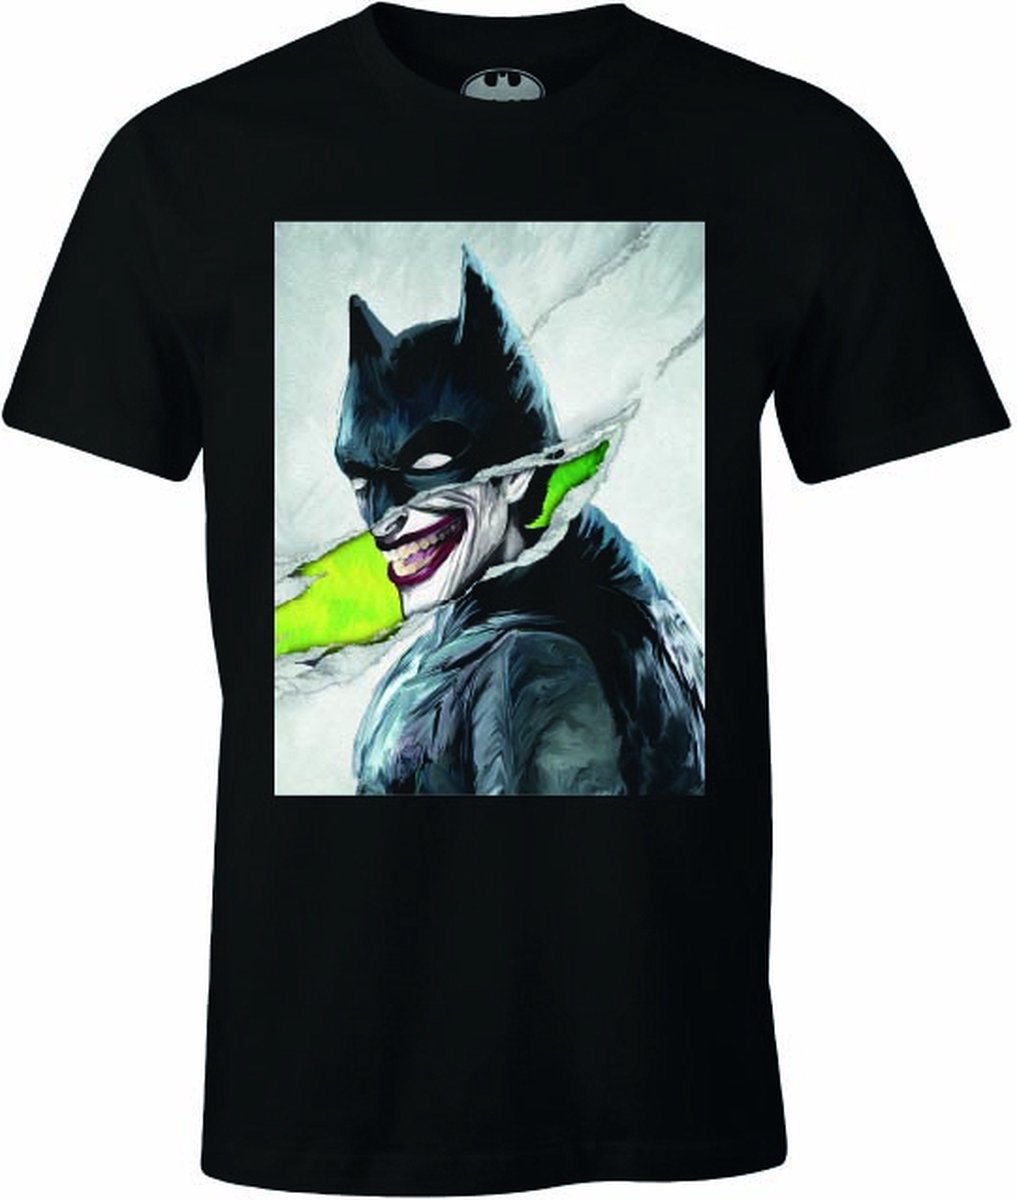 DC Comics - Batman - Black Men's T-shirt - The Joker disguised in Batman - L